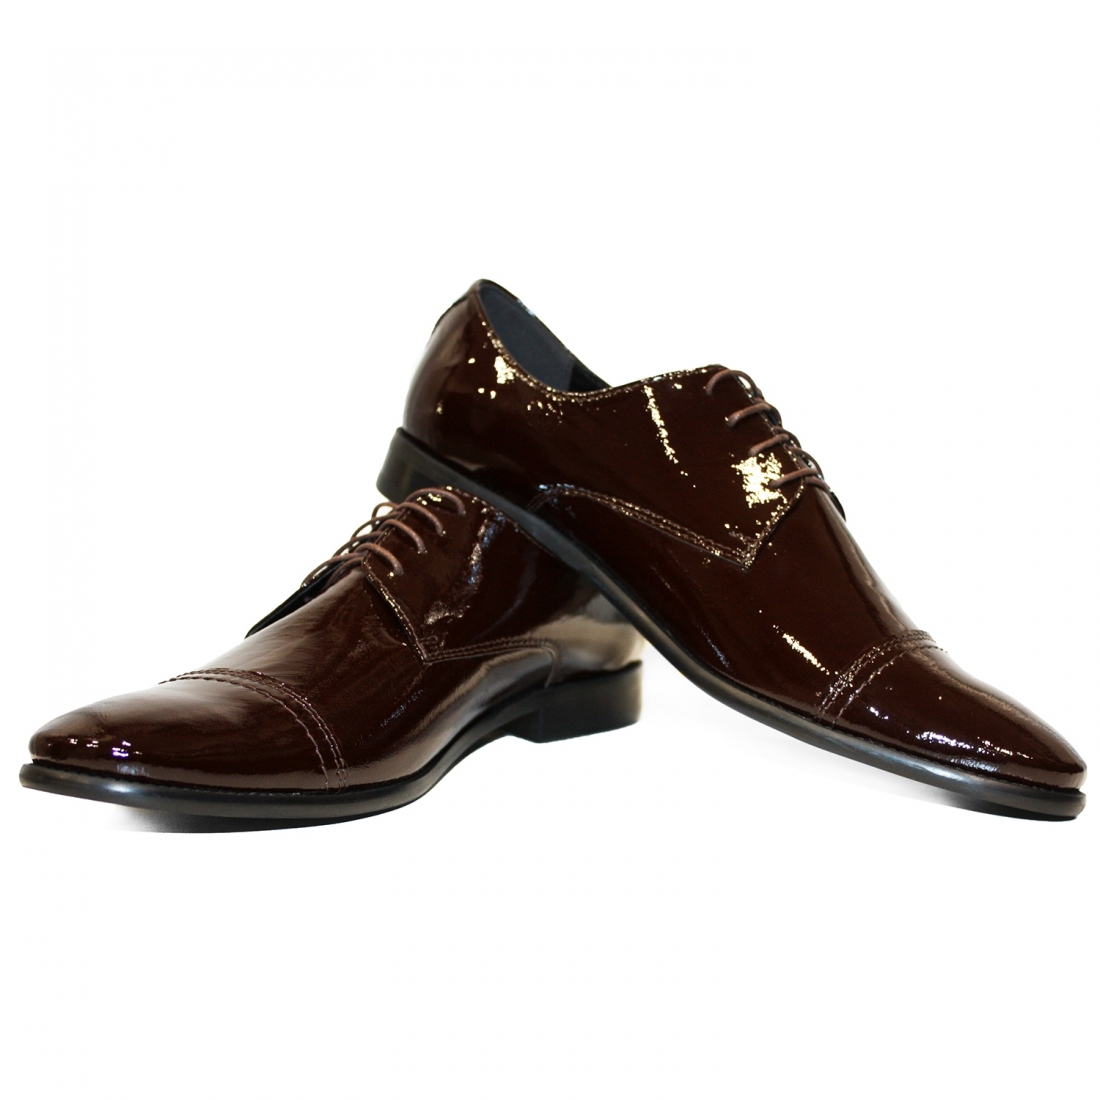 Modello Virello - Schnürer - Handmade Colorful Italian Leather Shoes